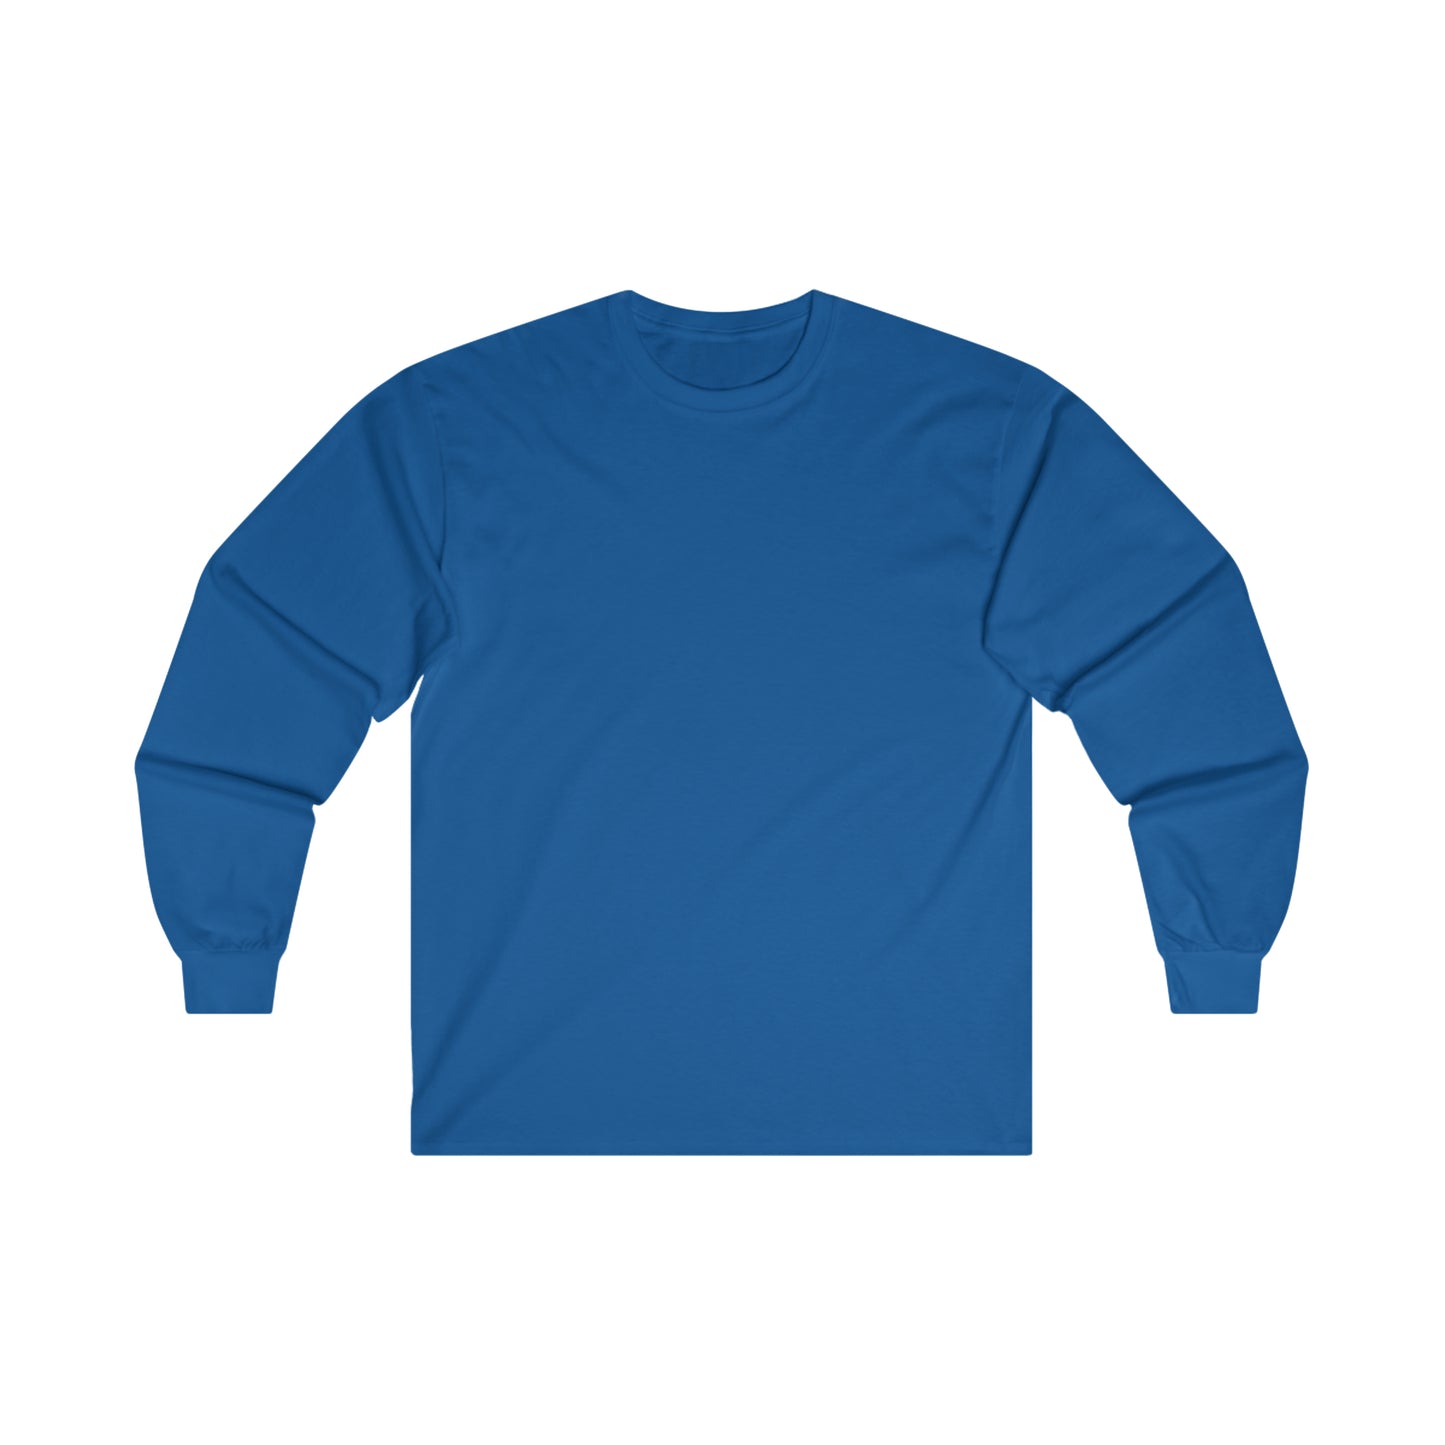 Dogo Power Argentina’s Finest Export Long Sleeve T-shirt